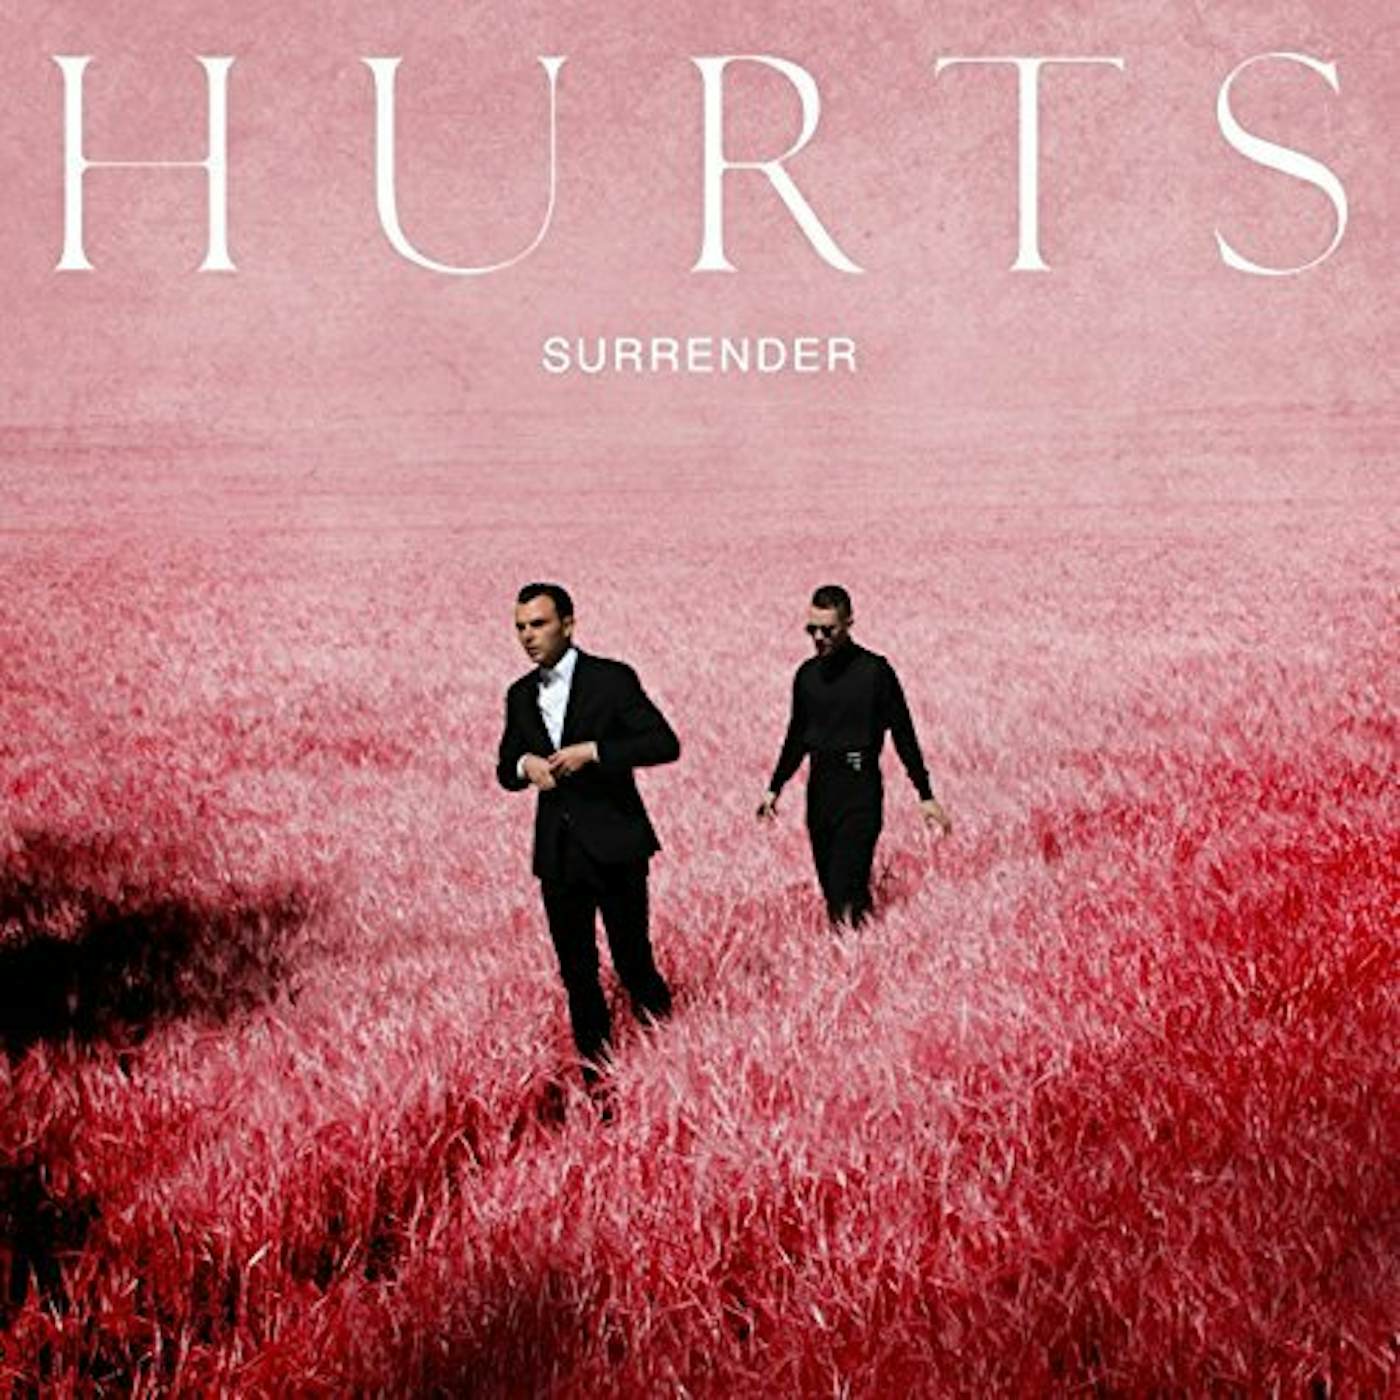 Музыка hurt. Hurts обложки. Hurts Surrender винил. Hurts 2015. Hurts Faith 2020.